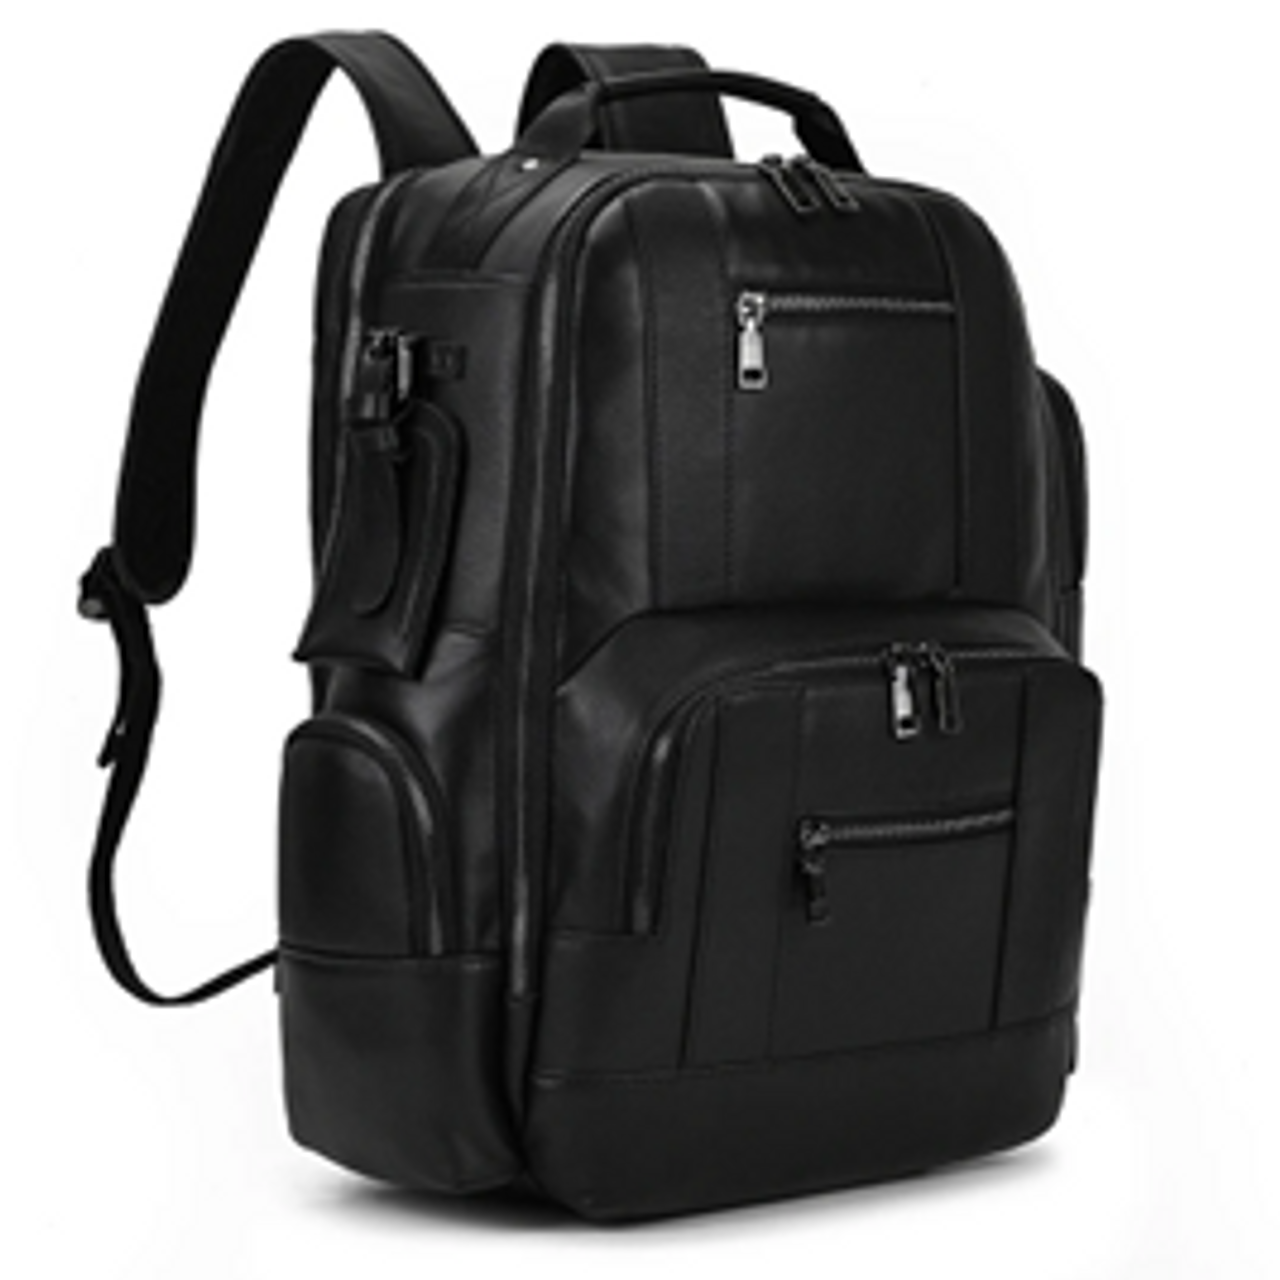 Beautiful Soft Black Leather Backpack